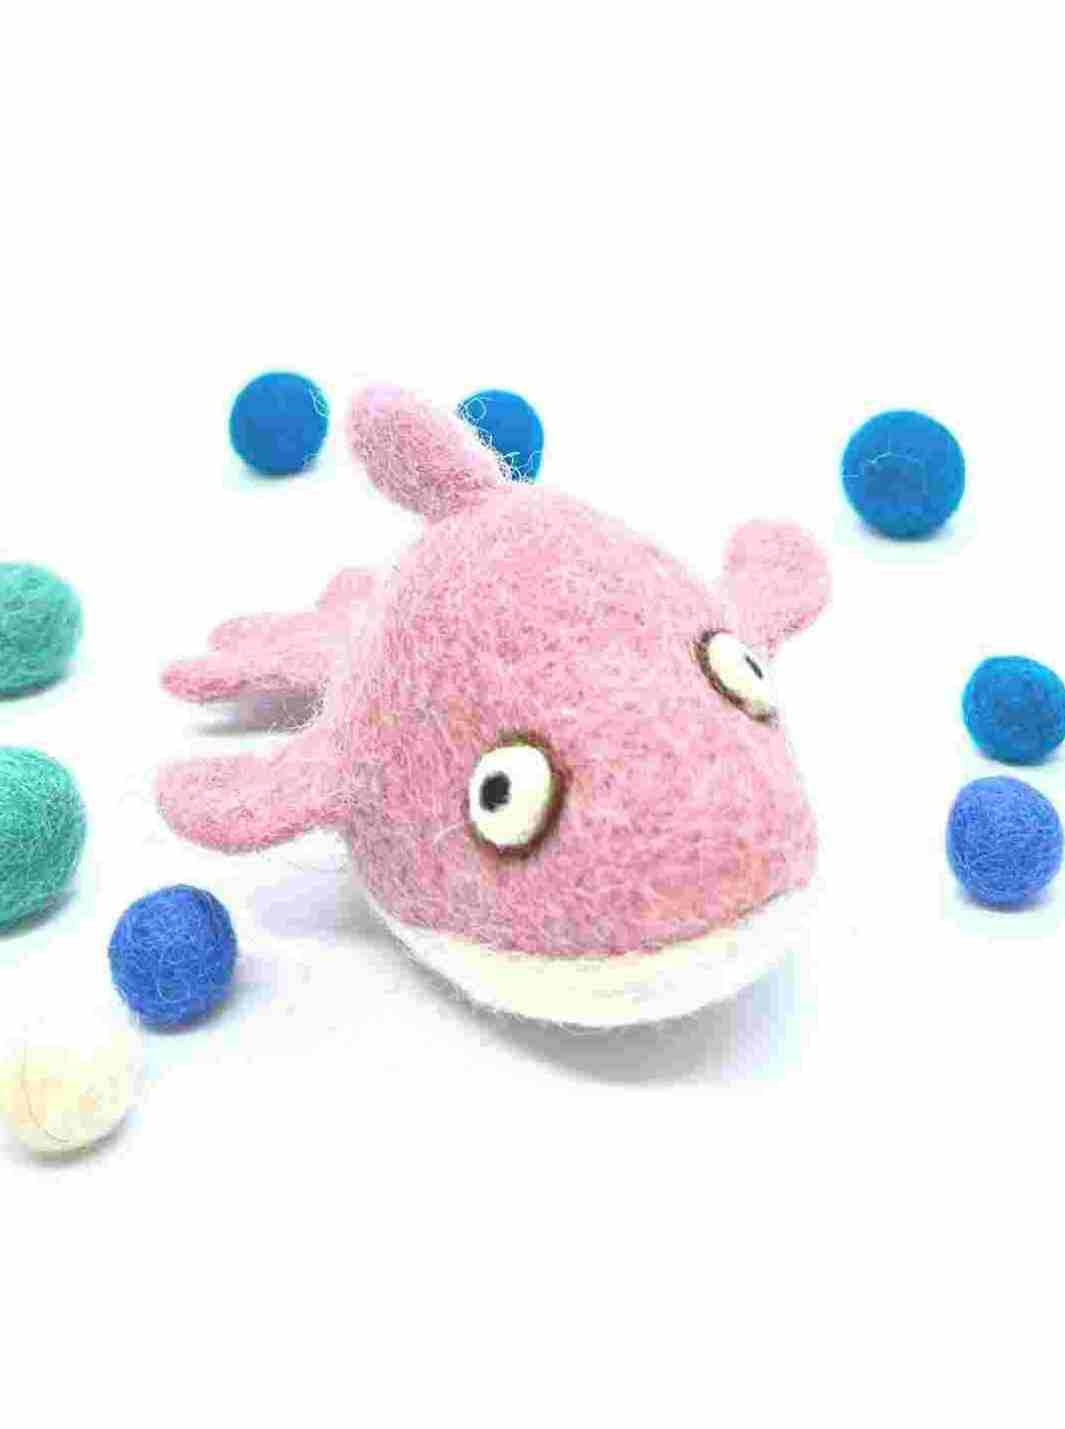 Felt Toys | Eco Cat Toys - Felt Pink Dolphin | Handmade Toys | Toy Sea Animals | Eco Dog & Cat